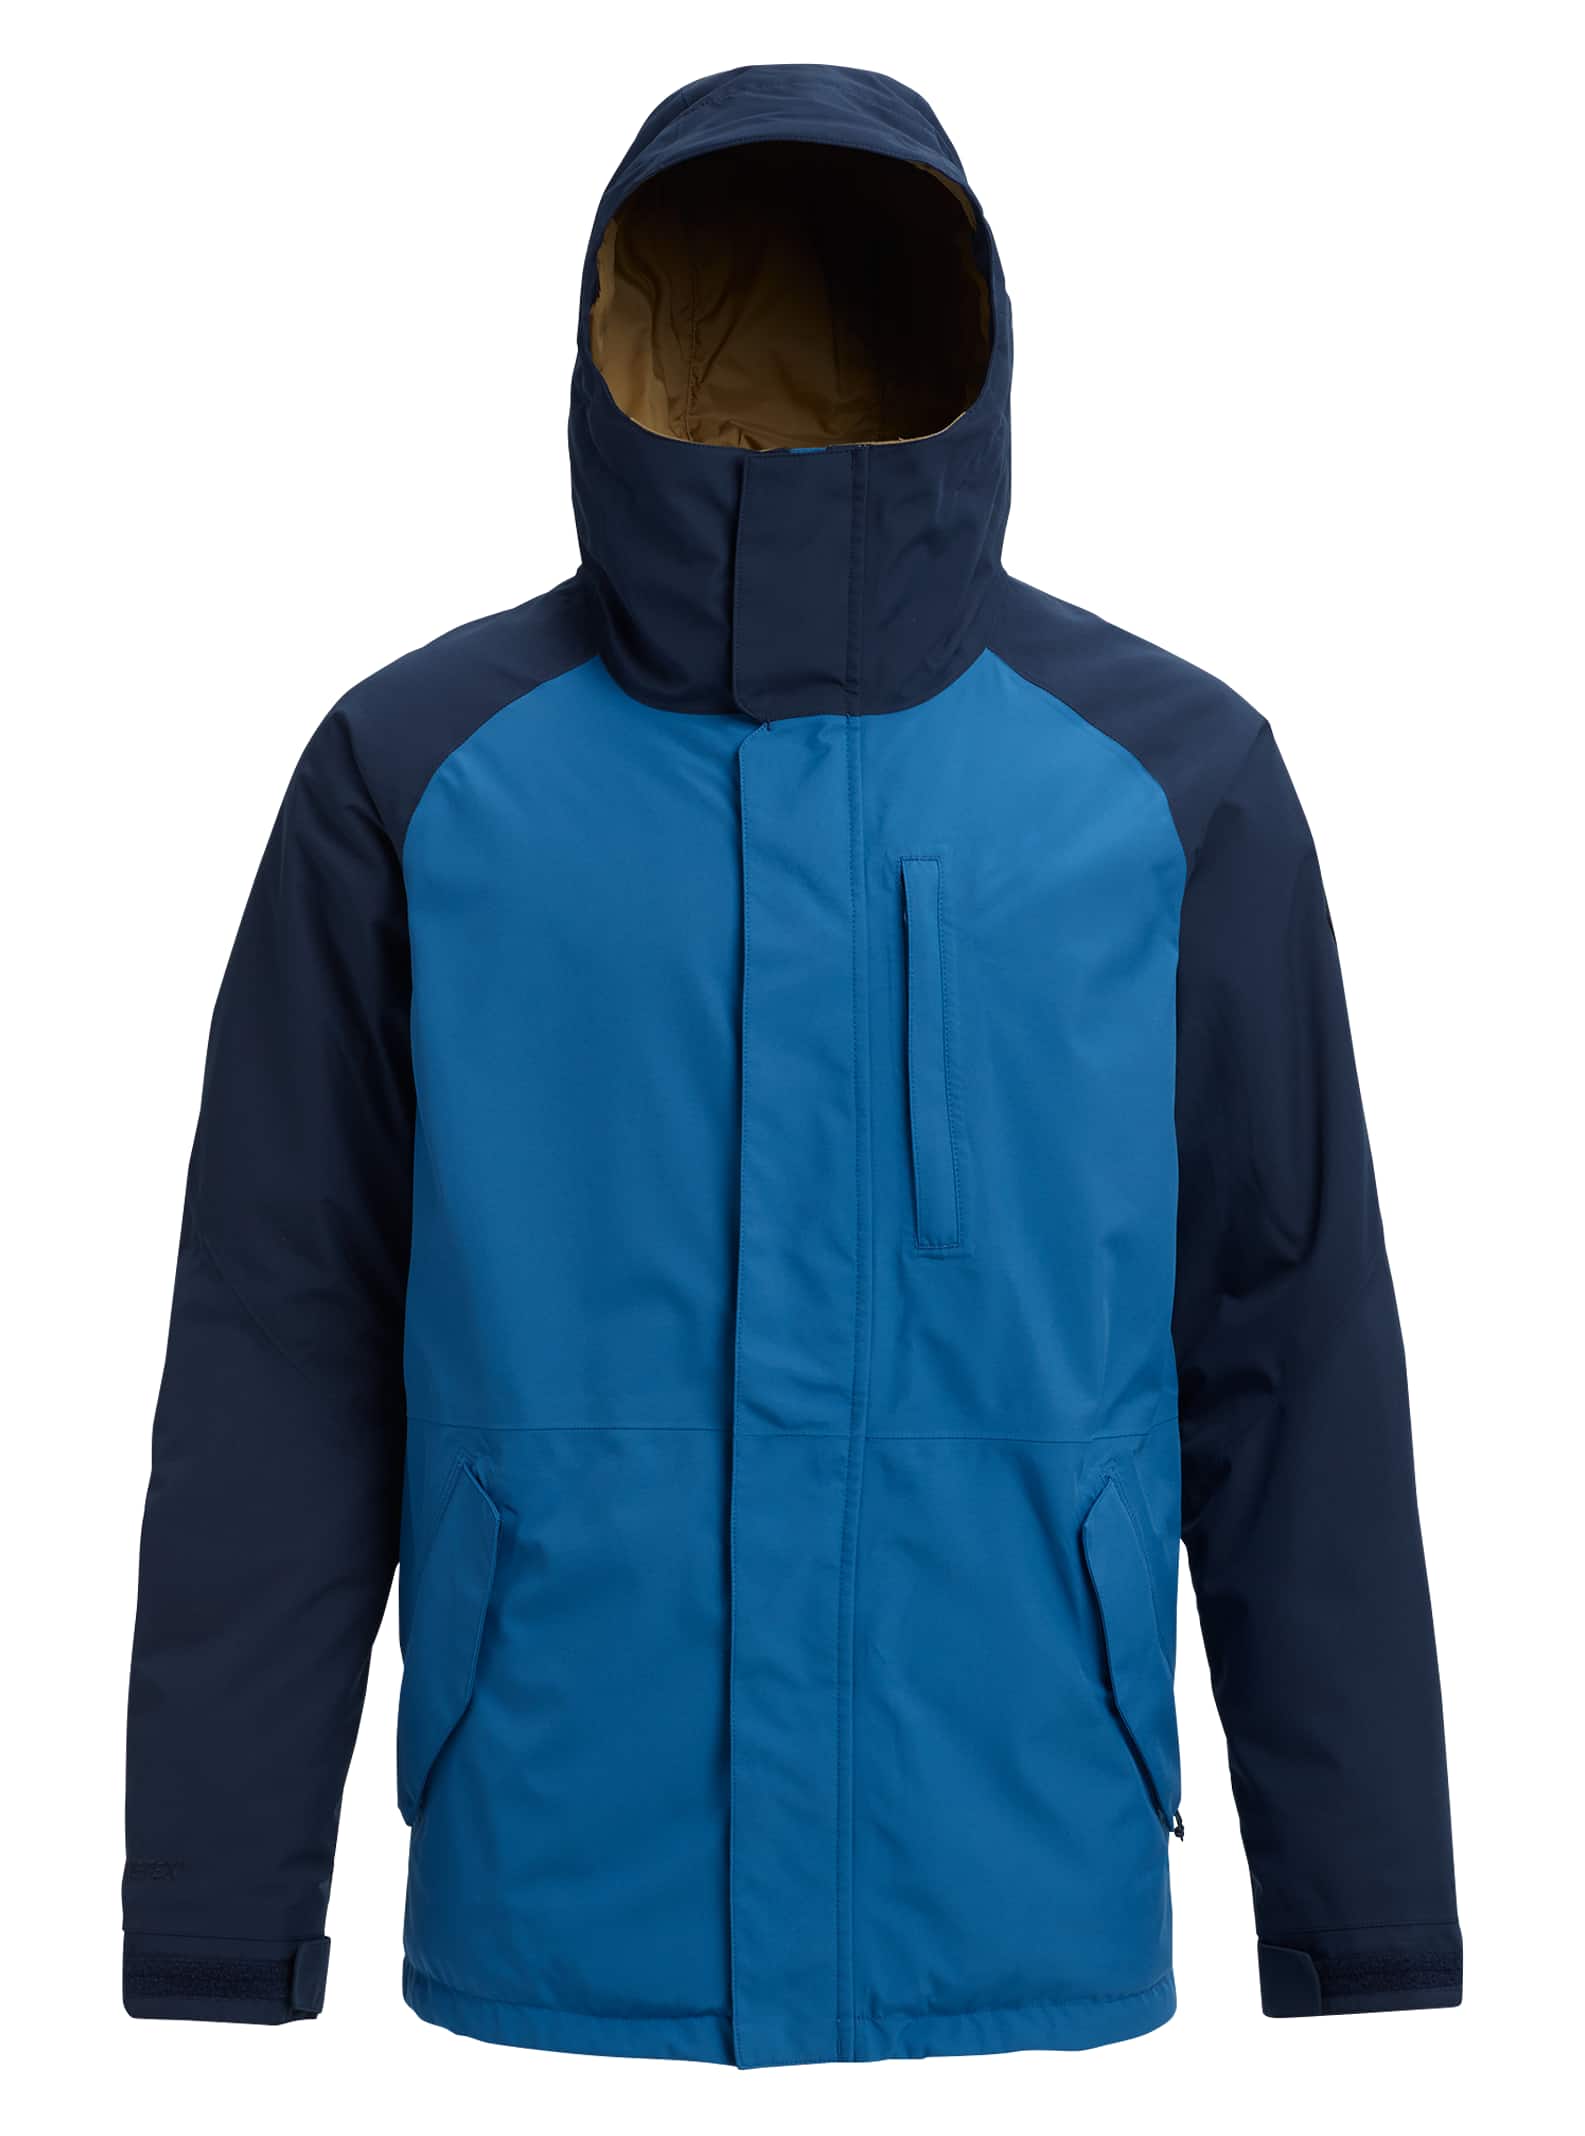 Men's Burton GORE-TEX Radial Shell Jacket | Burton.com Winter 2019 US